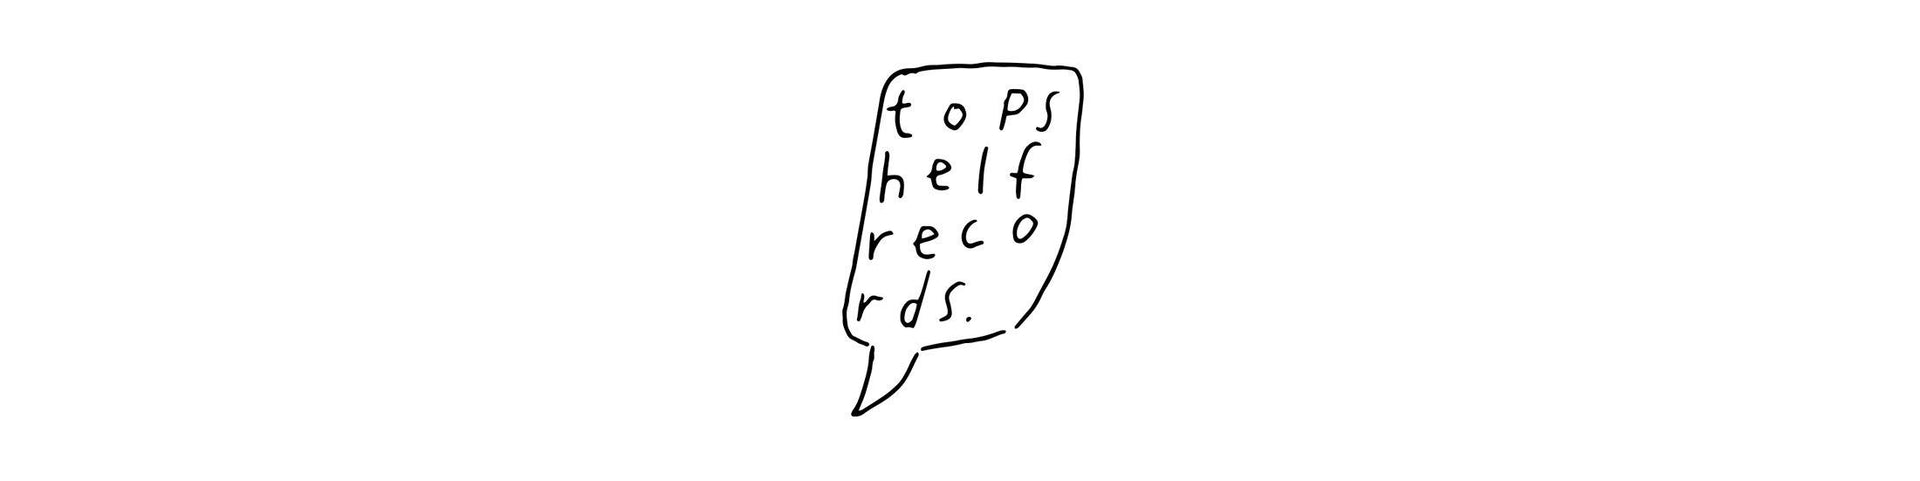 Shop – Top Shelf Records – Band & Music Merch – Cold Cuts Merch